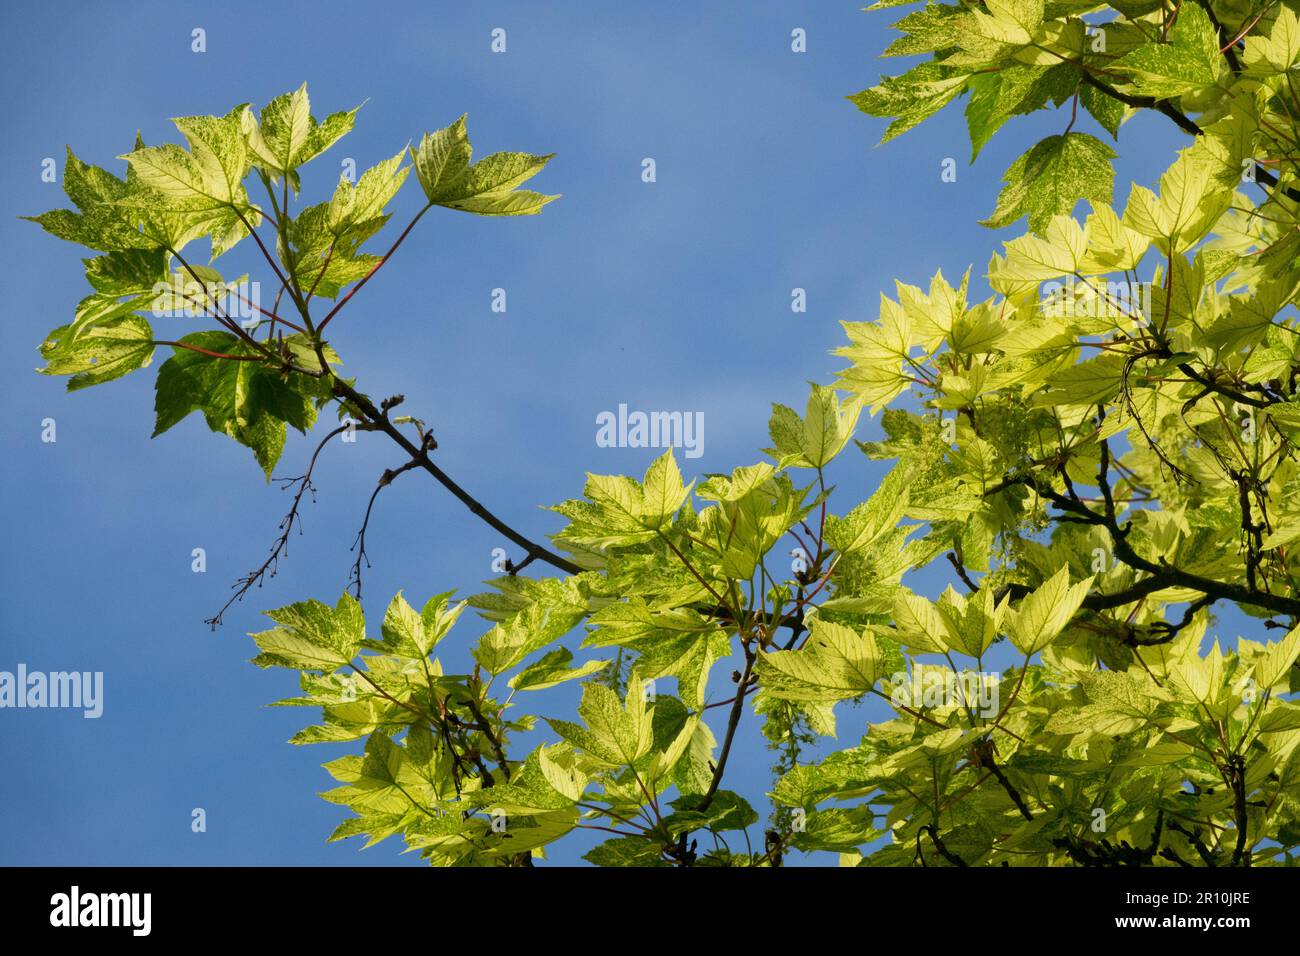 Season, Spring, Leaves, Maple, Foliage, Sycamore tree, Branches, Acer pseudoplatanus 'Nizetii', Deciduous, Plant, Sky, Background Stock Photo